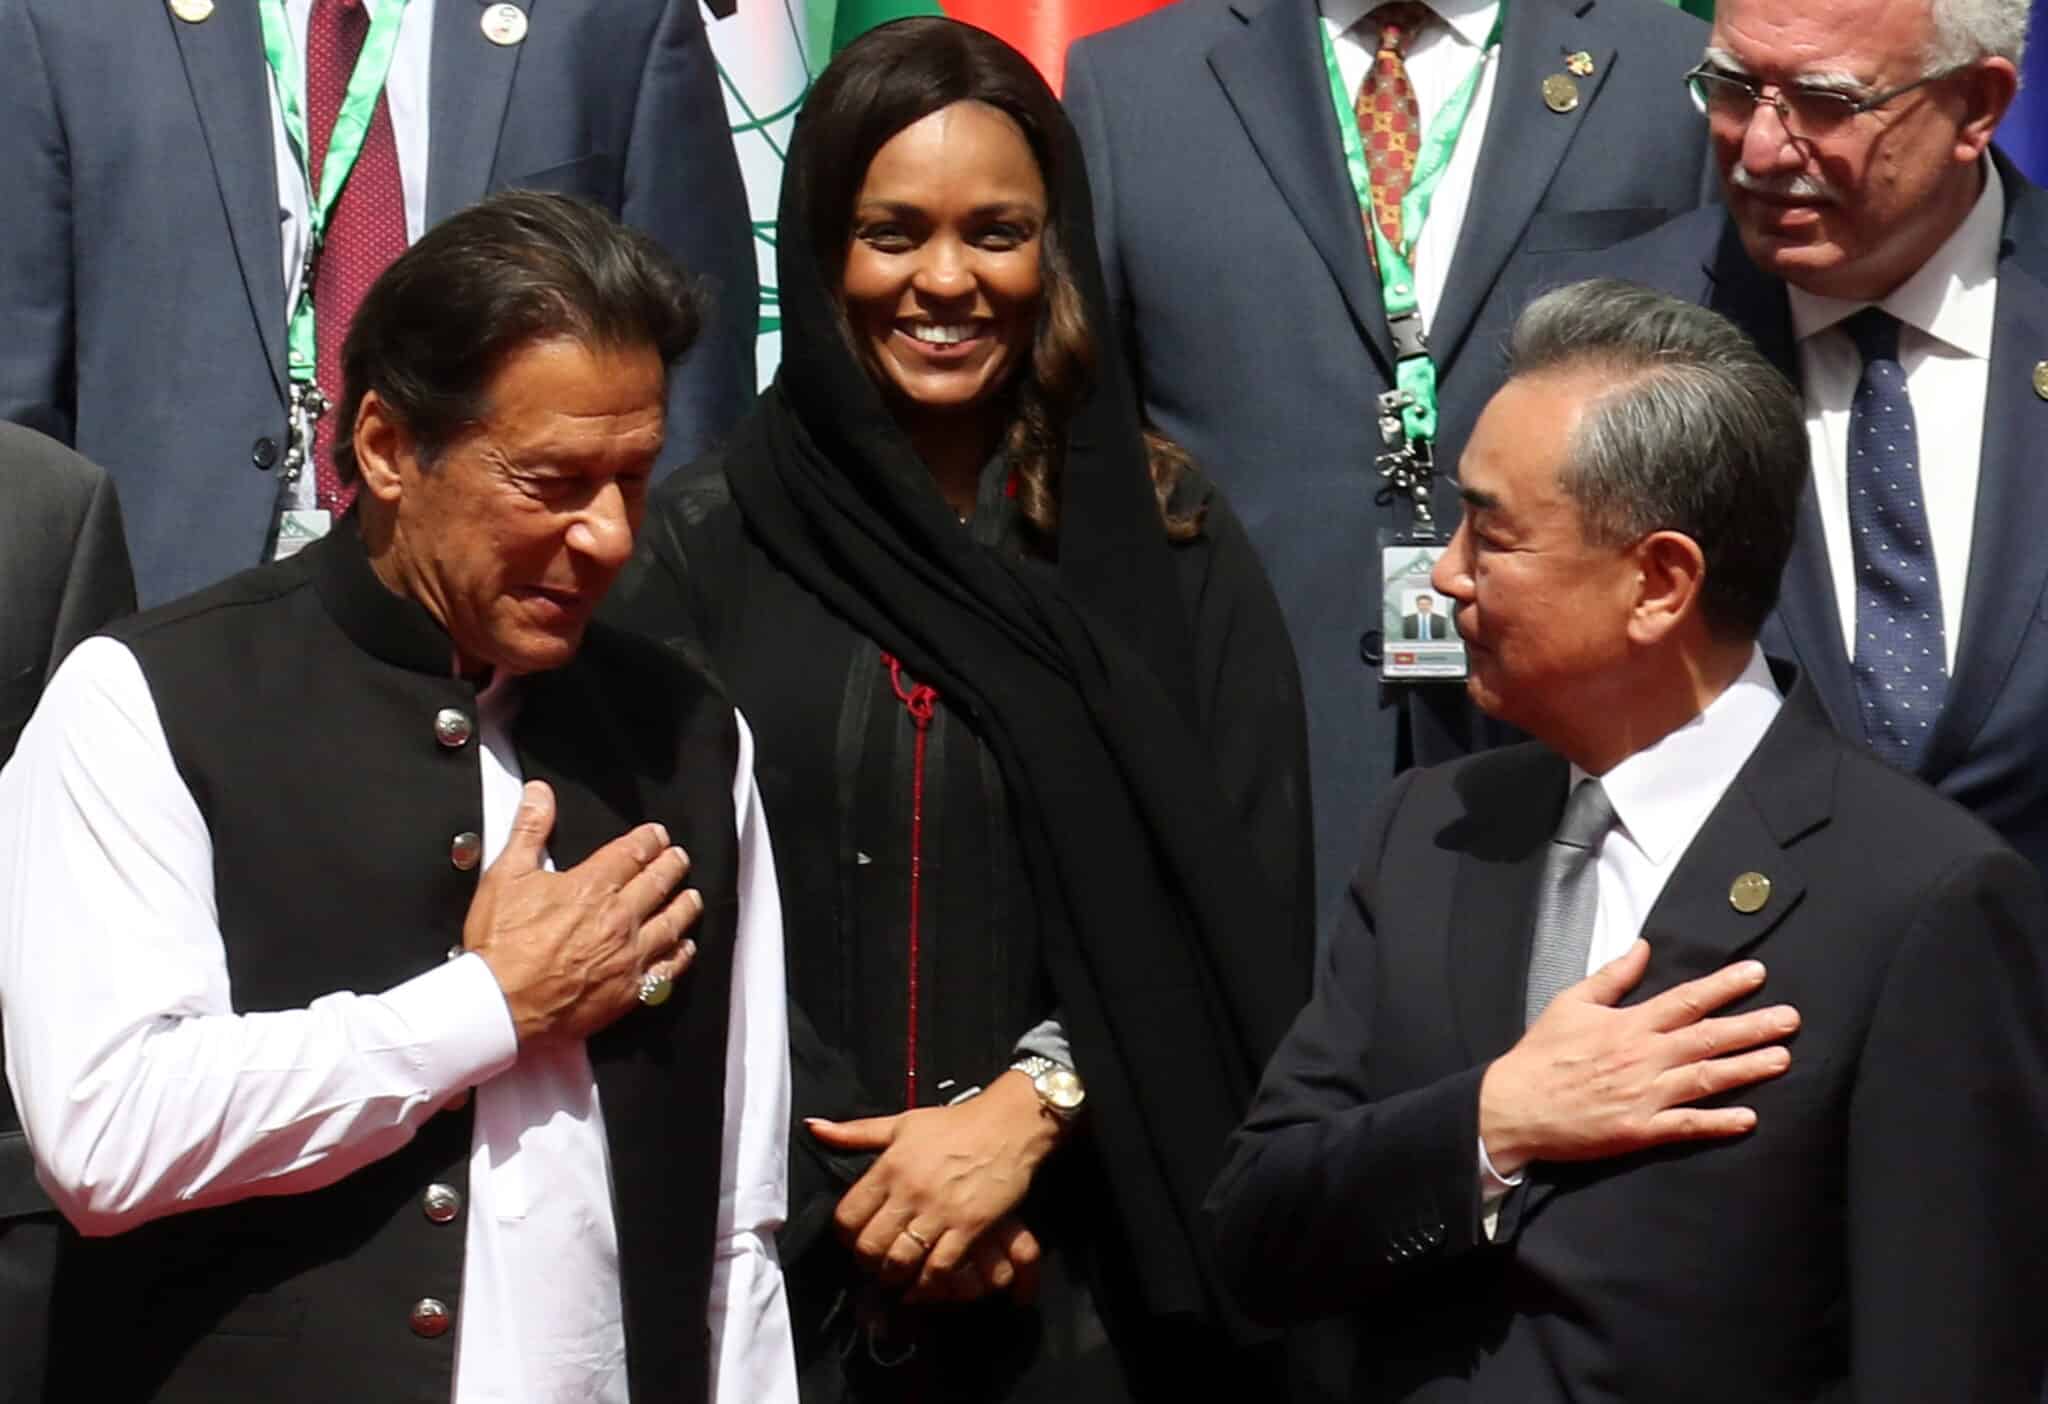 El ministro chino de Exteriores, Wang Yi, saluda al primer ministro de Pakistán, Imran Khan